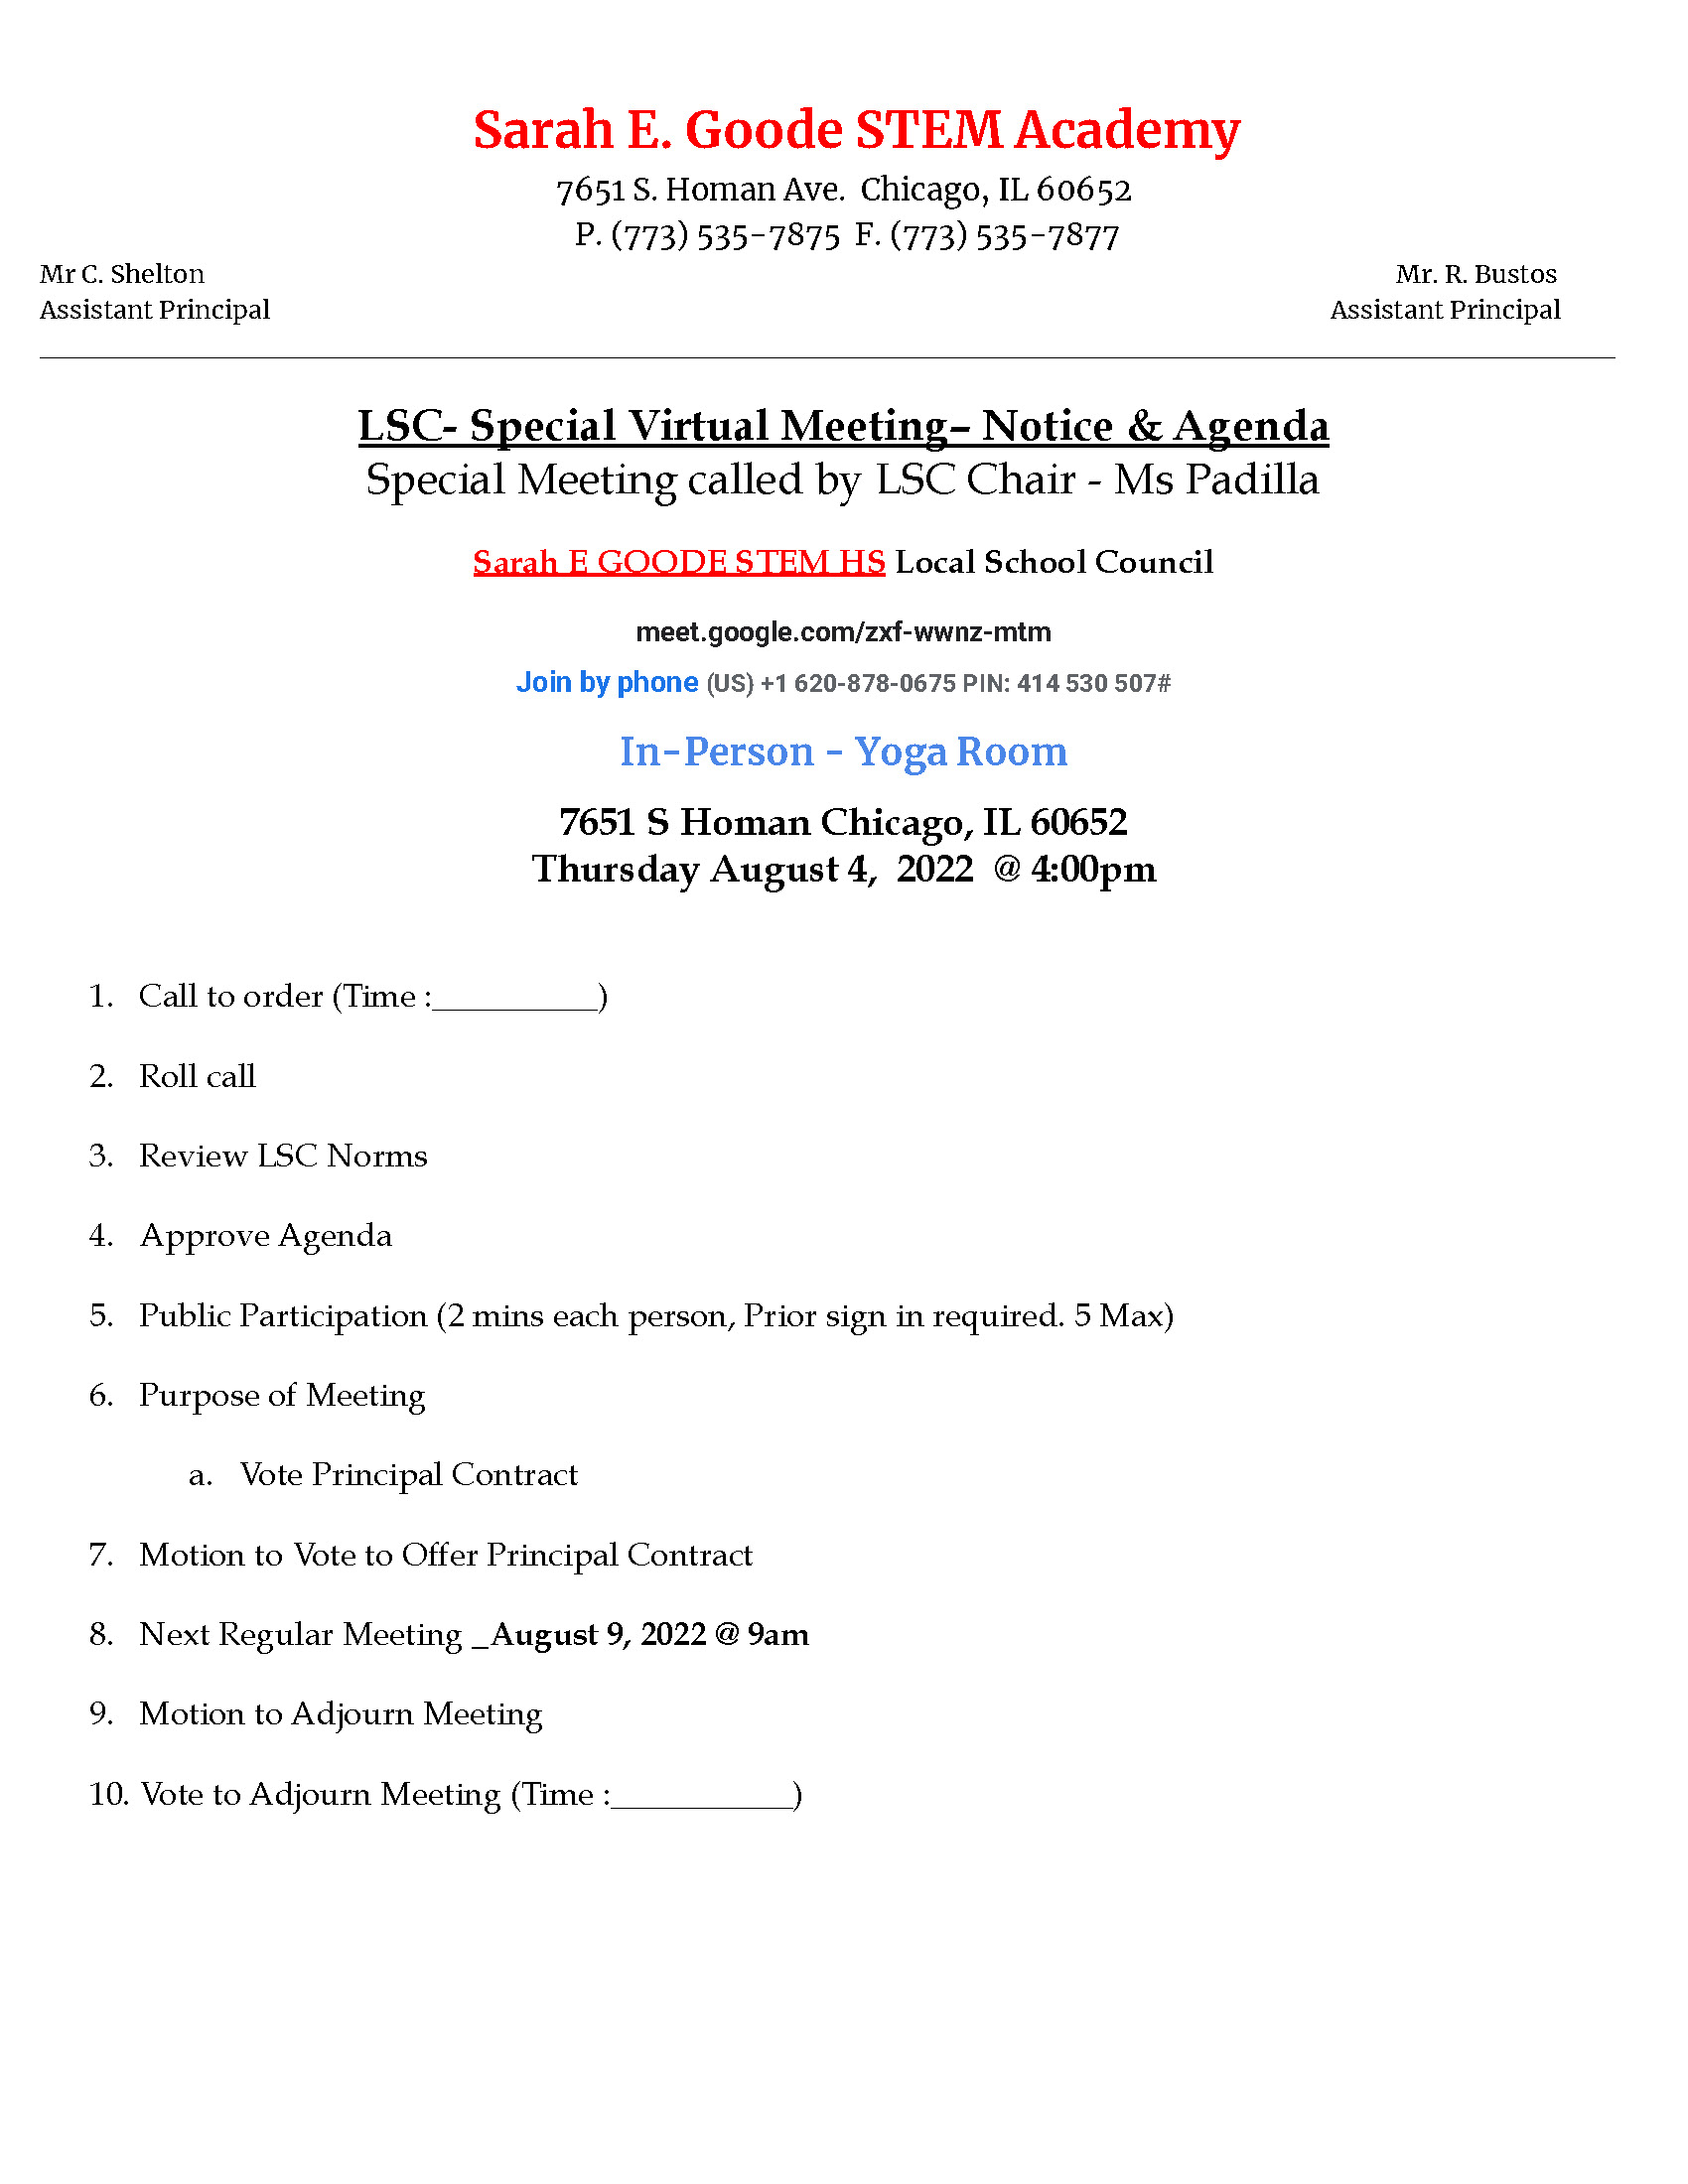 LSC Special Virtual Meeting